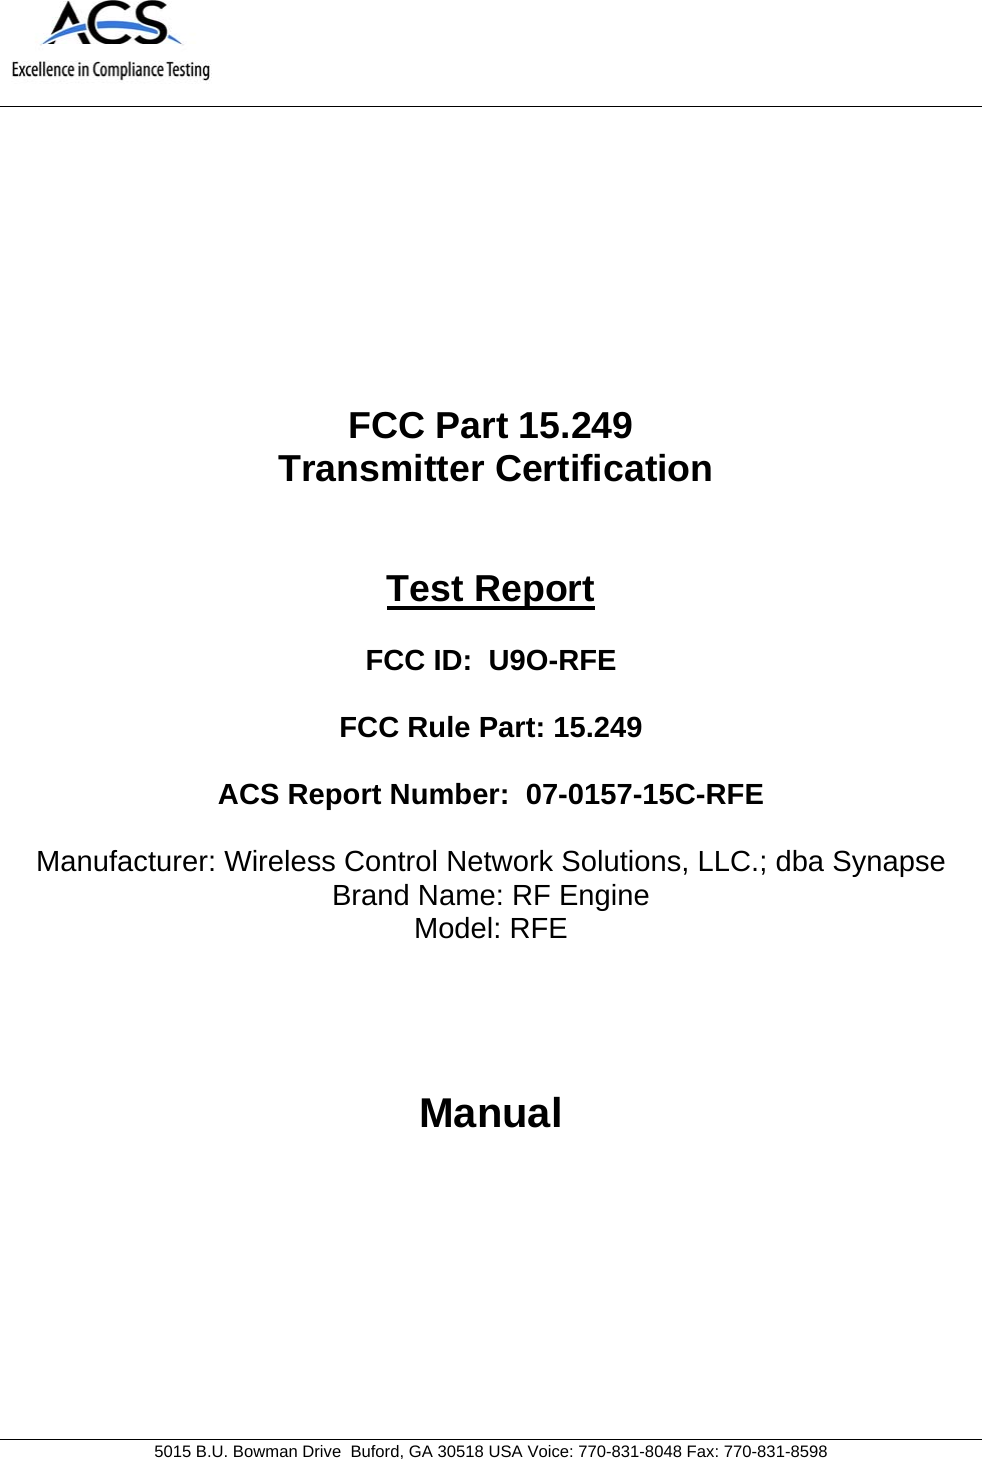   5015 B.U. Bowman Drive  Buford, GA 30518 USA Voice: 770-831-8048 Fax: 770-831-8598   FCC Part 15.249  Transmitter Certification   Test Report  FCC ID:  U9O-RFE  FCC Rule Part: 15.249  ACS Report Number:  07-0157-15C-RFE   Manufacturer: Wireless Control Network Solutions, LLC.; dba Synapse Brand Name: RF Engine  Model: RFE    Manual 